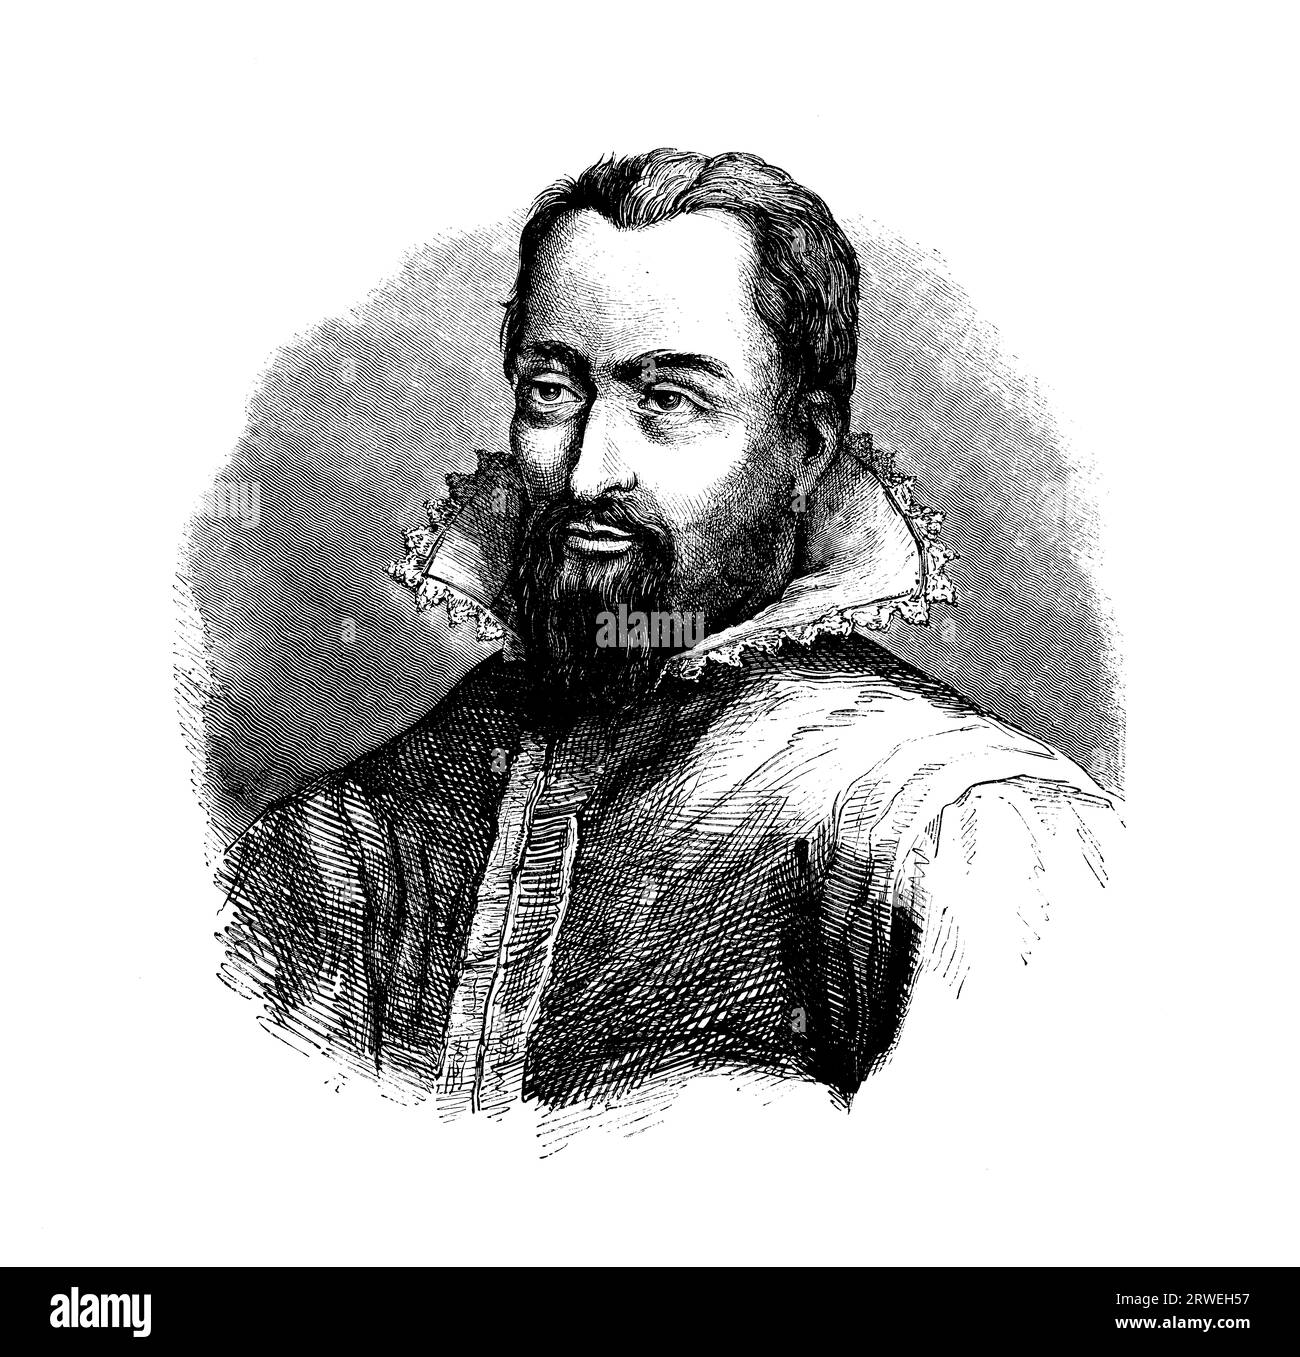 johannes Kepler, Famous Astronomer - vintage engraved illustration portrait Stock Photo